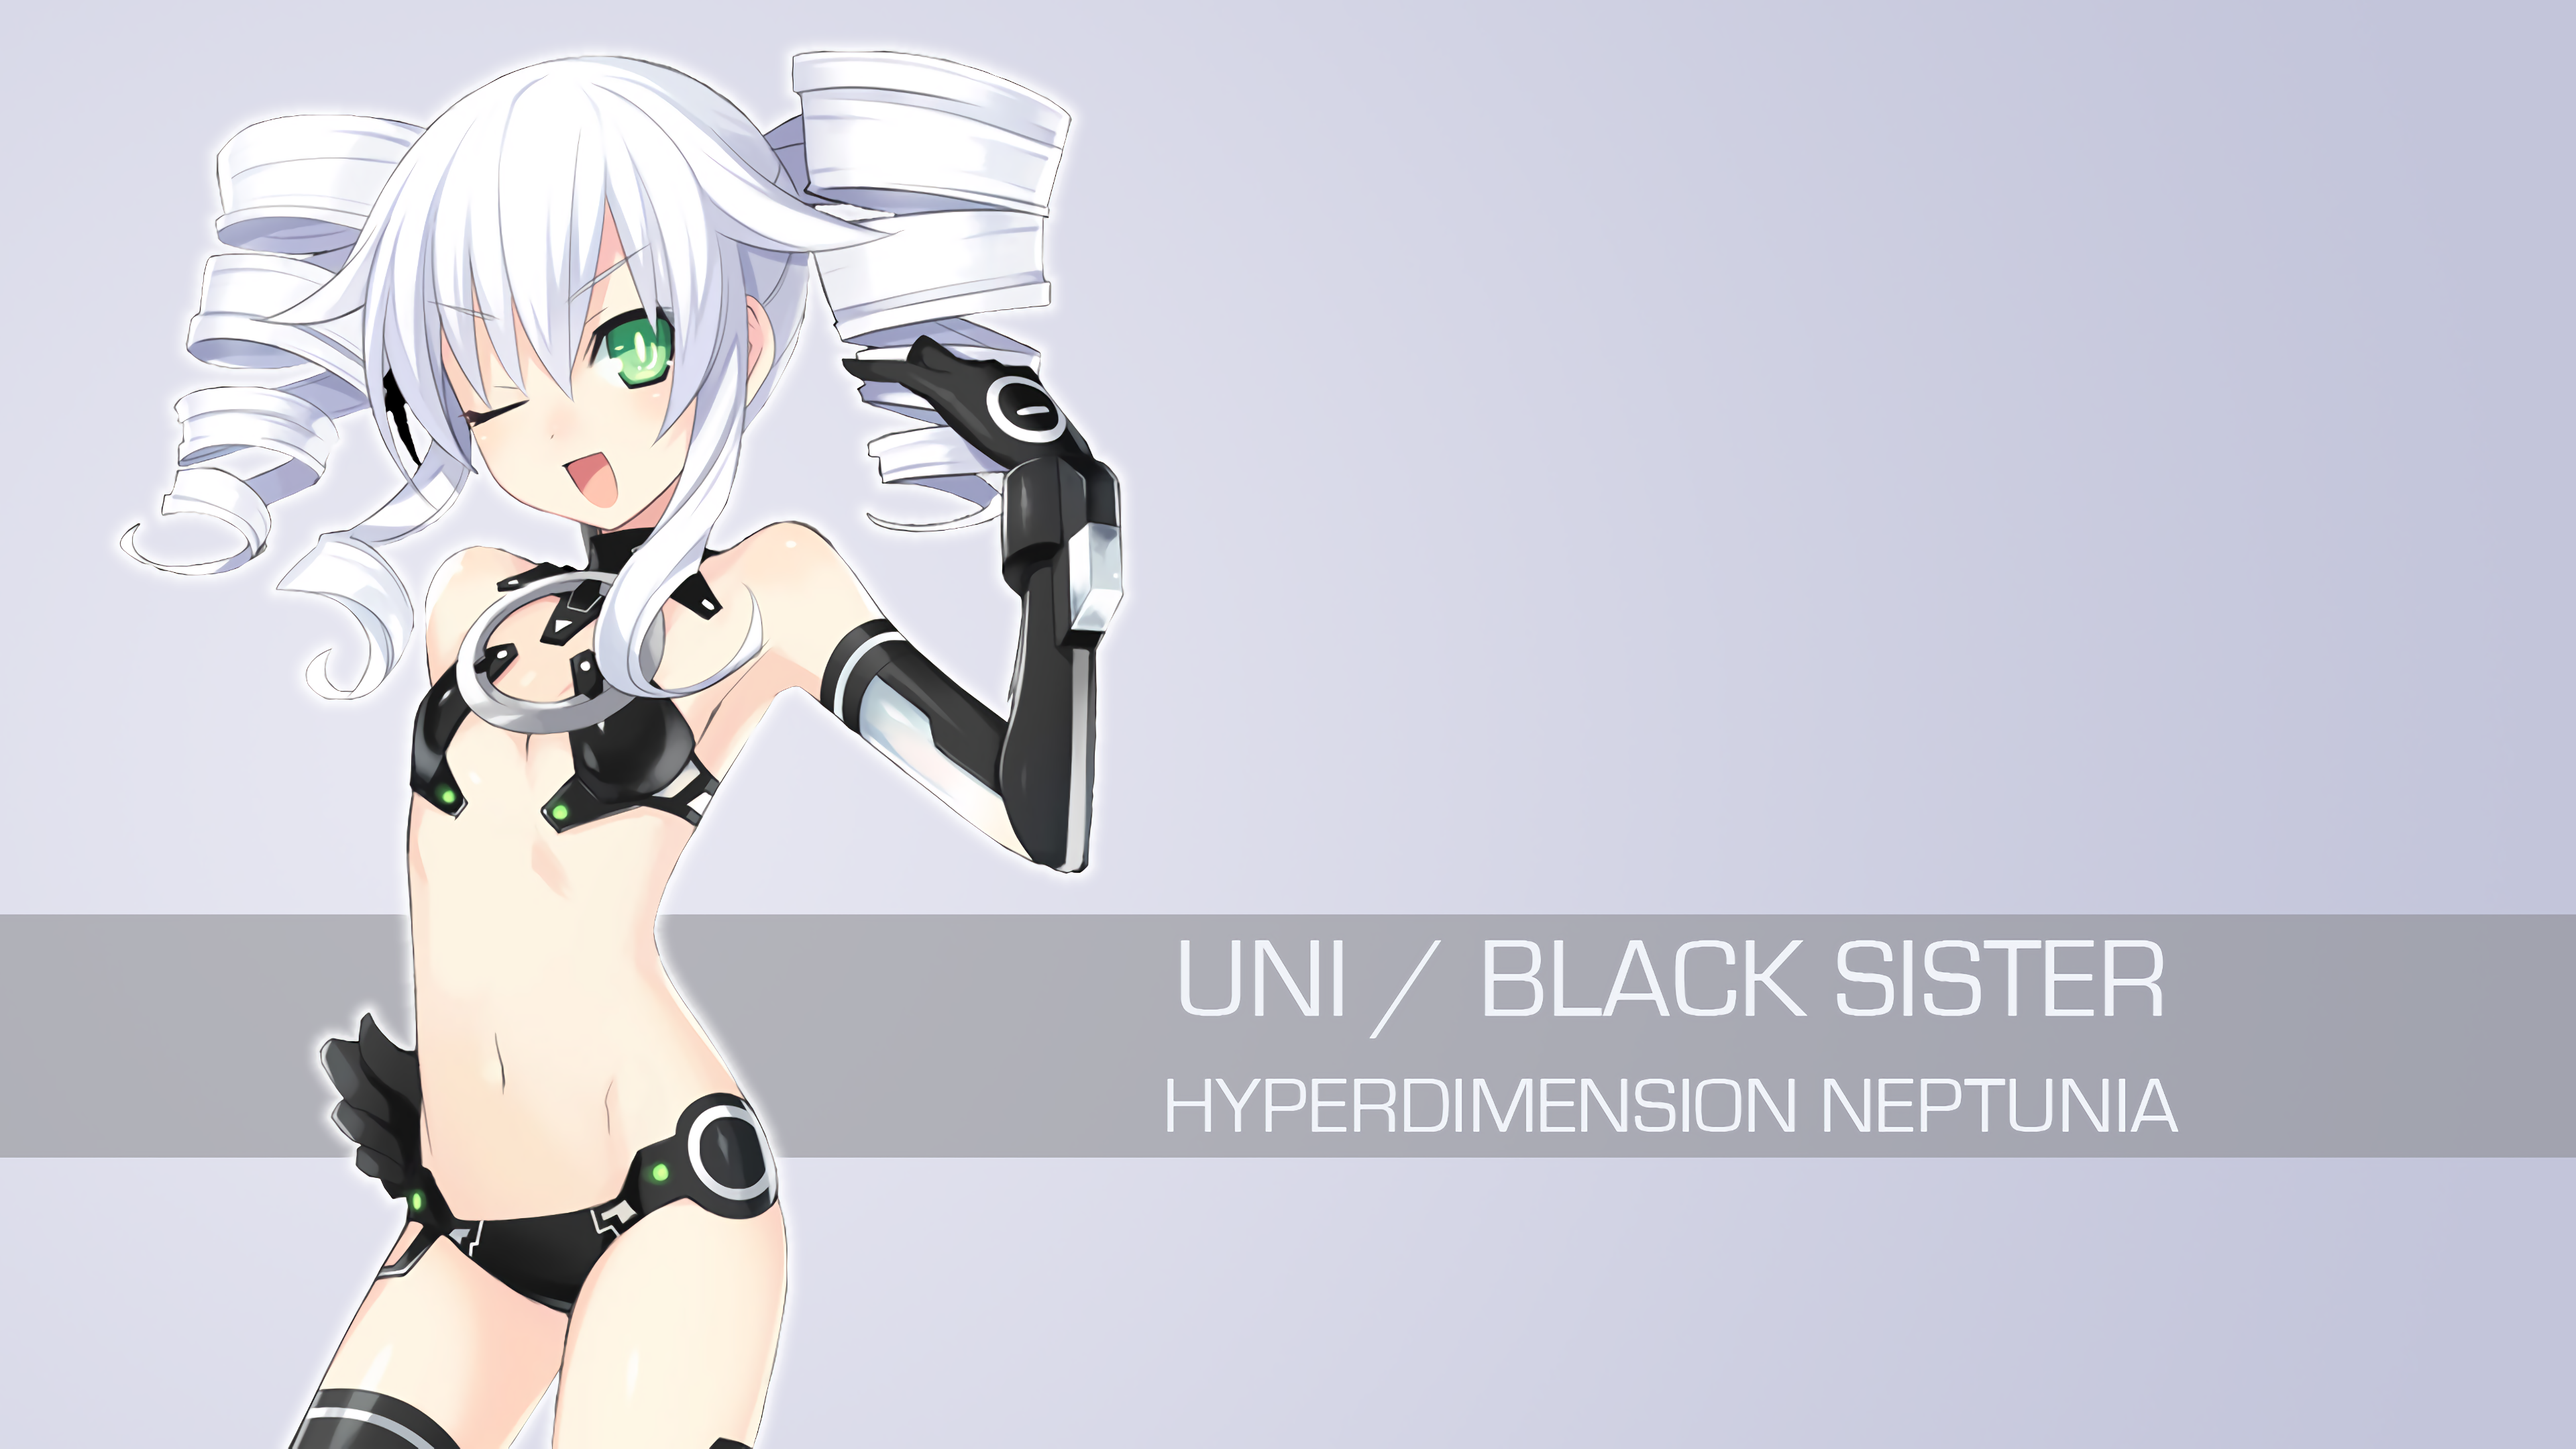 Hyperdimension Neptunia-Uni / Black Sister by spectralfire234 on DeviantArt